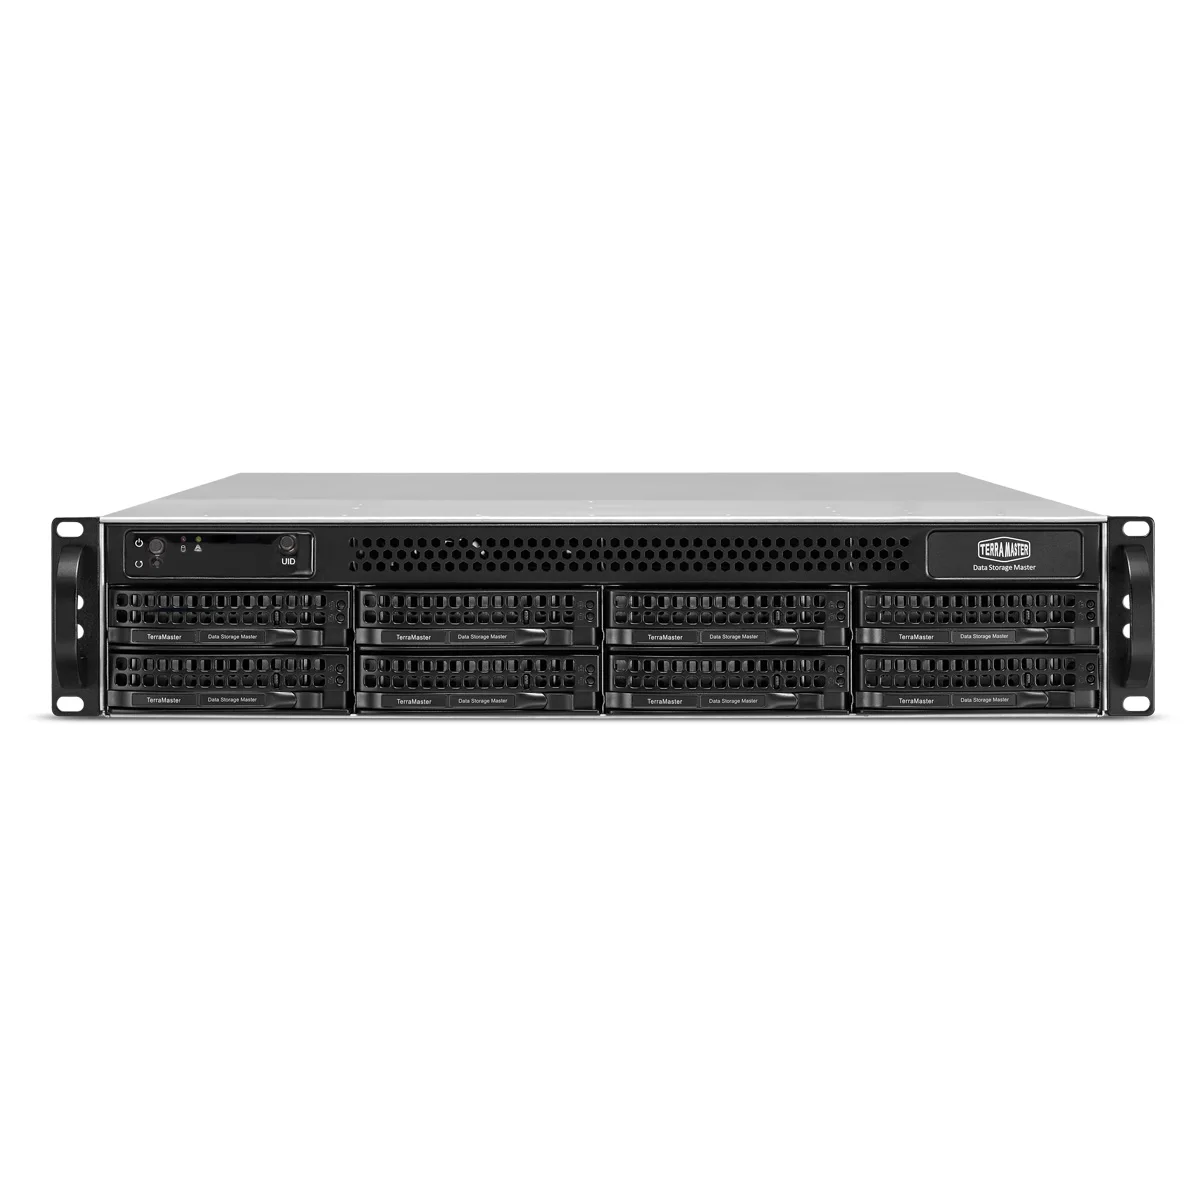 TerraMaster U8-111 10GbE NAS Rackmount 2U 8-bay Network Storage Server Intel Quad-core CPU with Hardware Encryption (Diskless) (